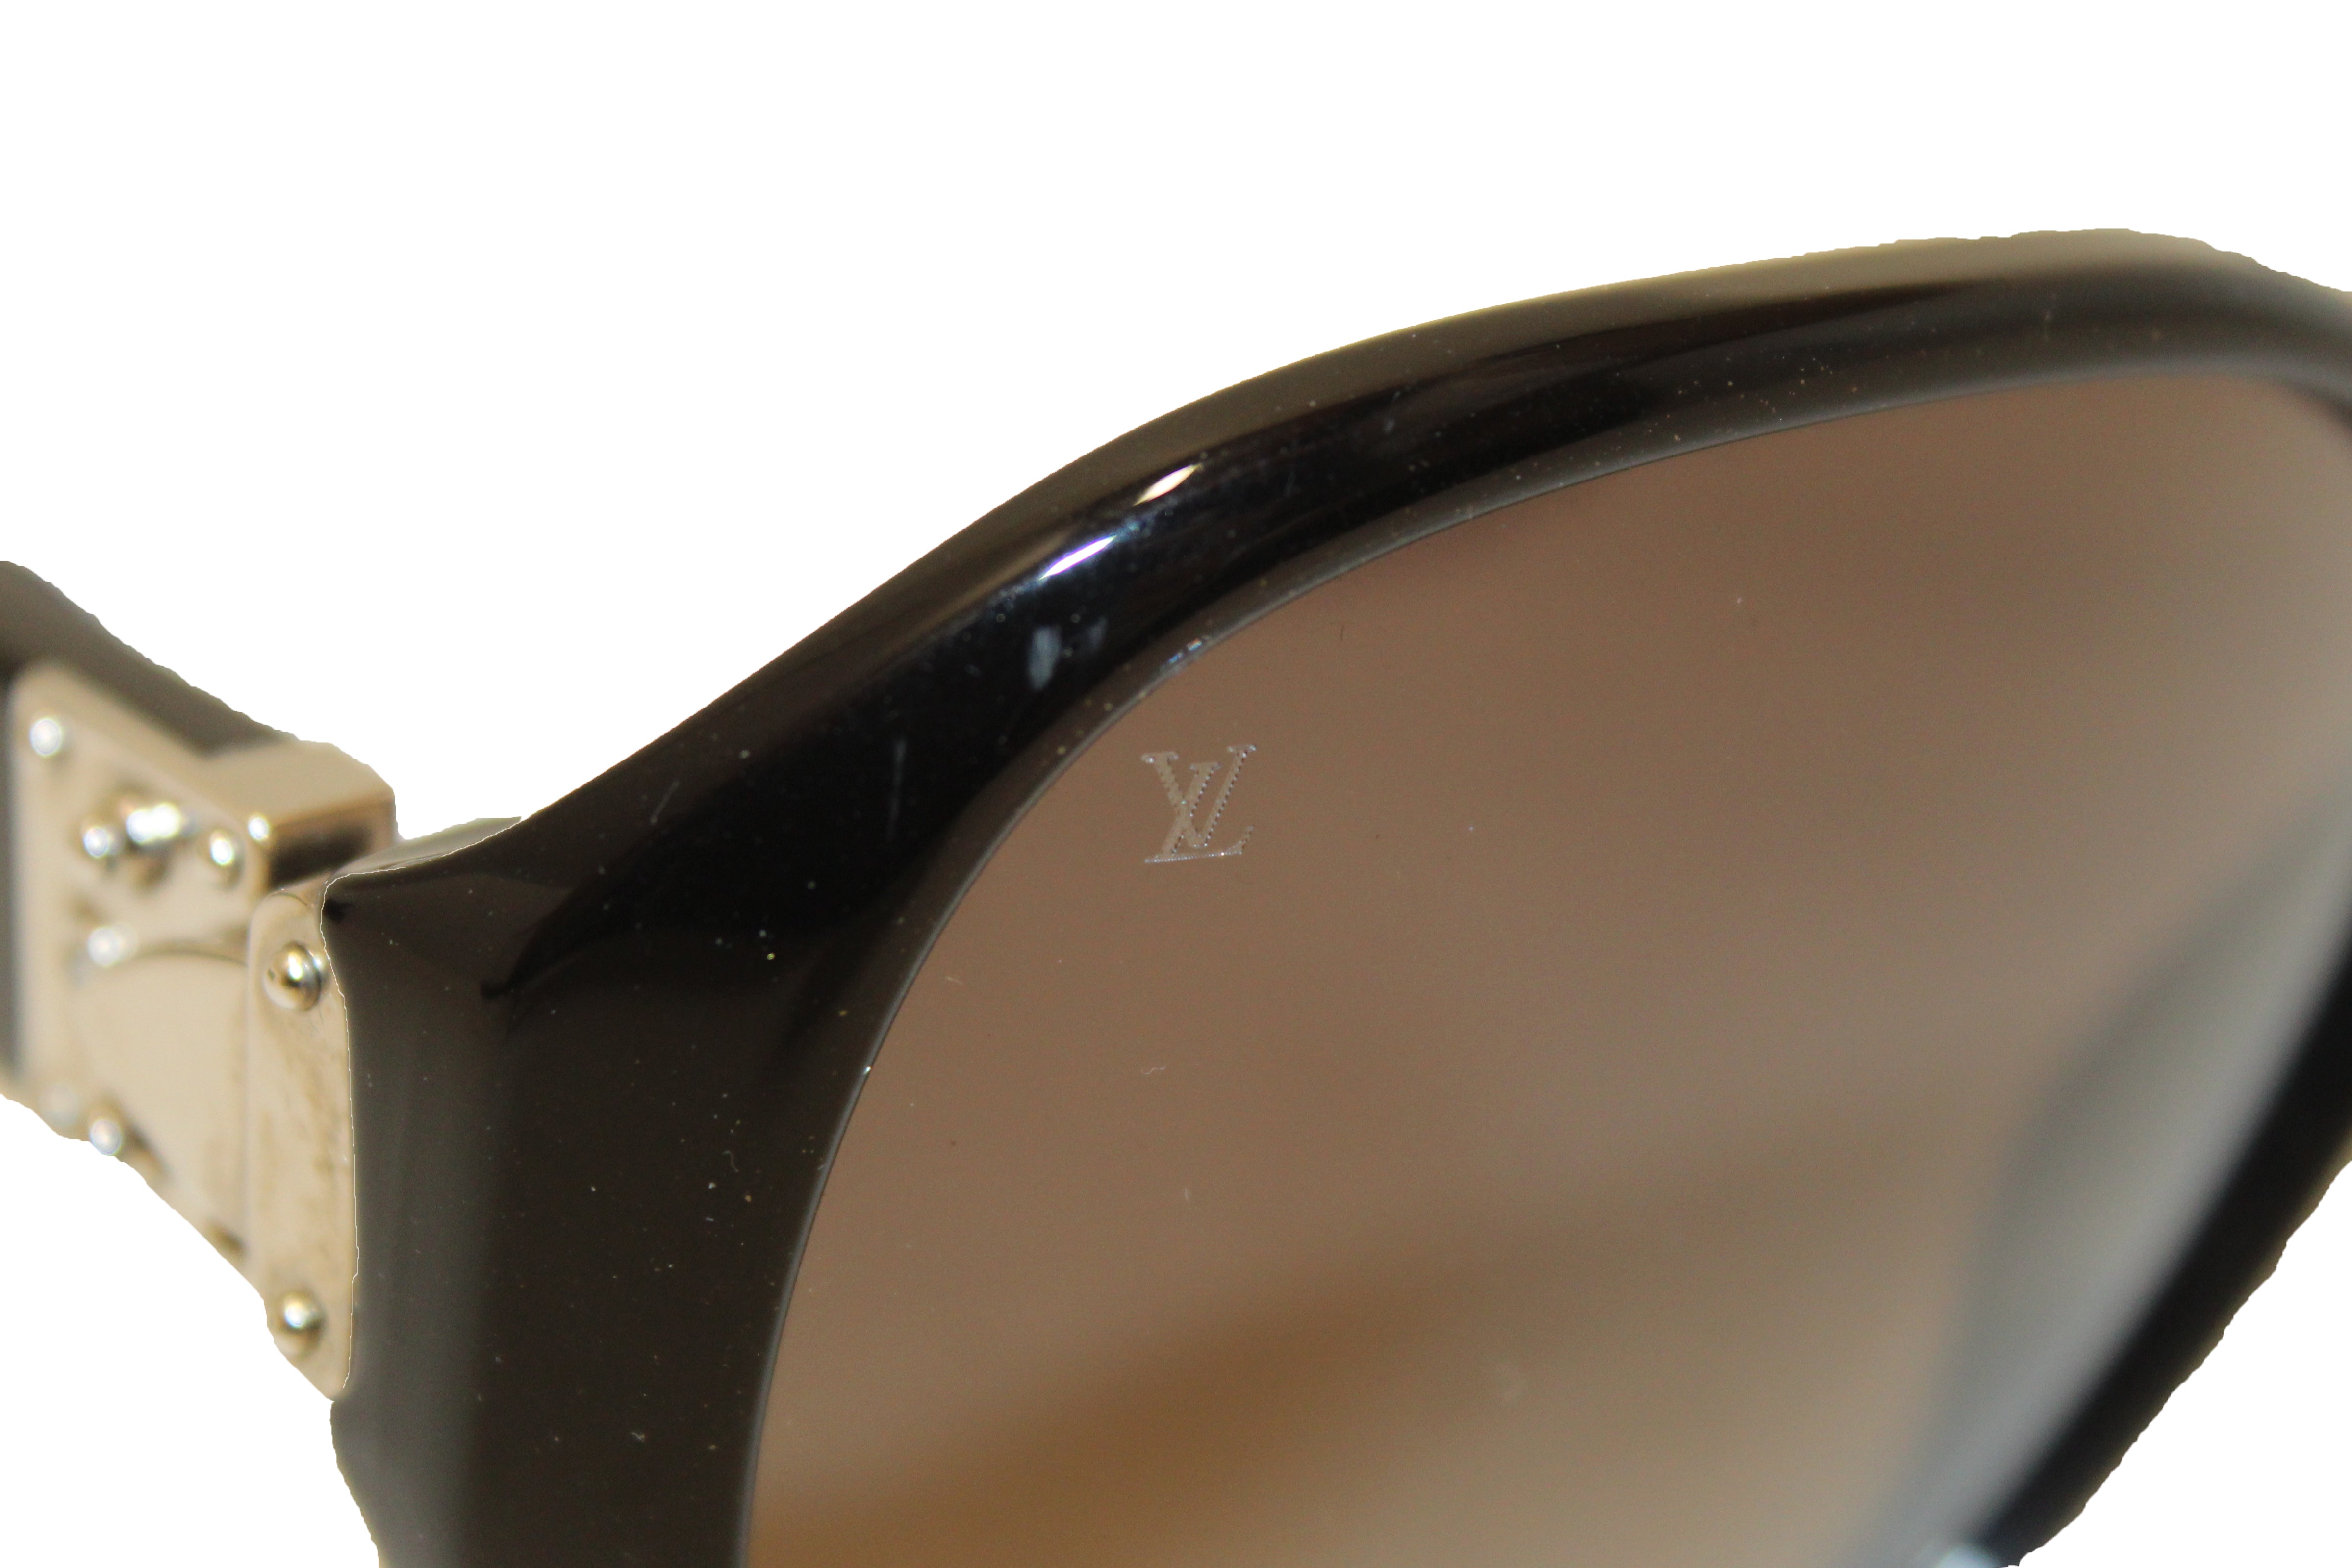 Louis-vuitton Oversized sunglasses women Z0255E